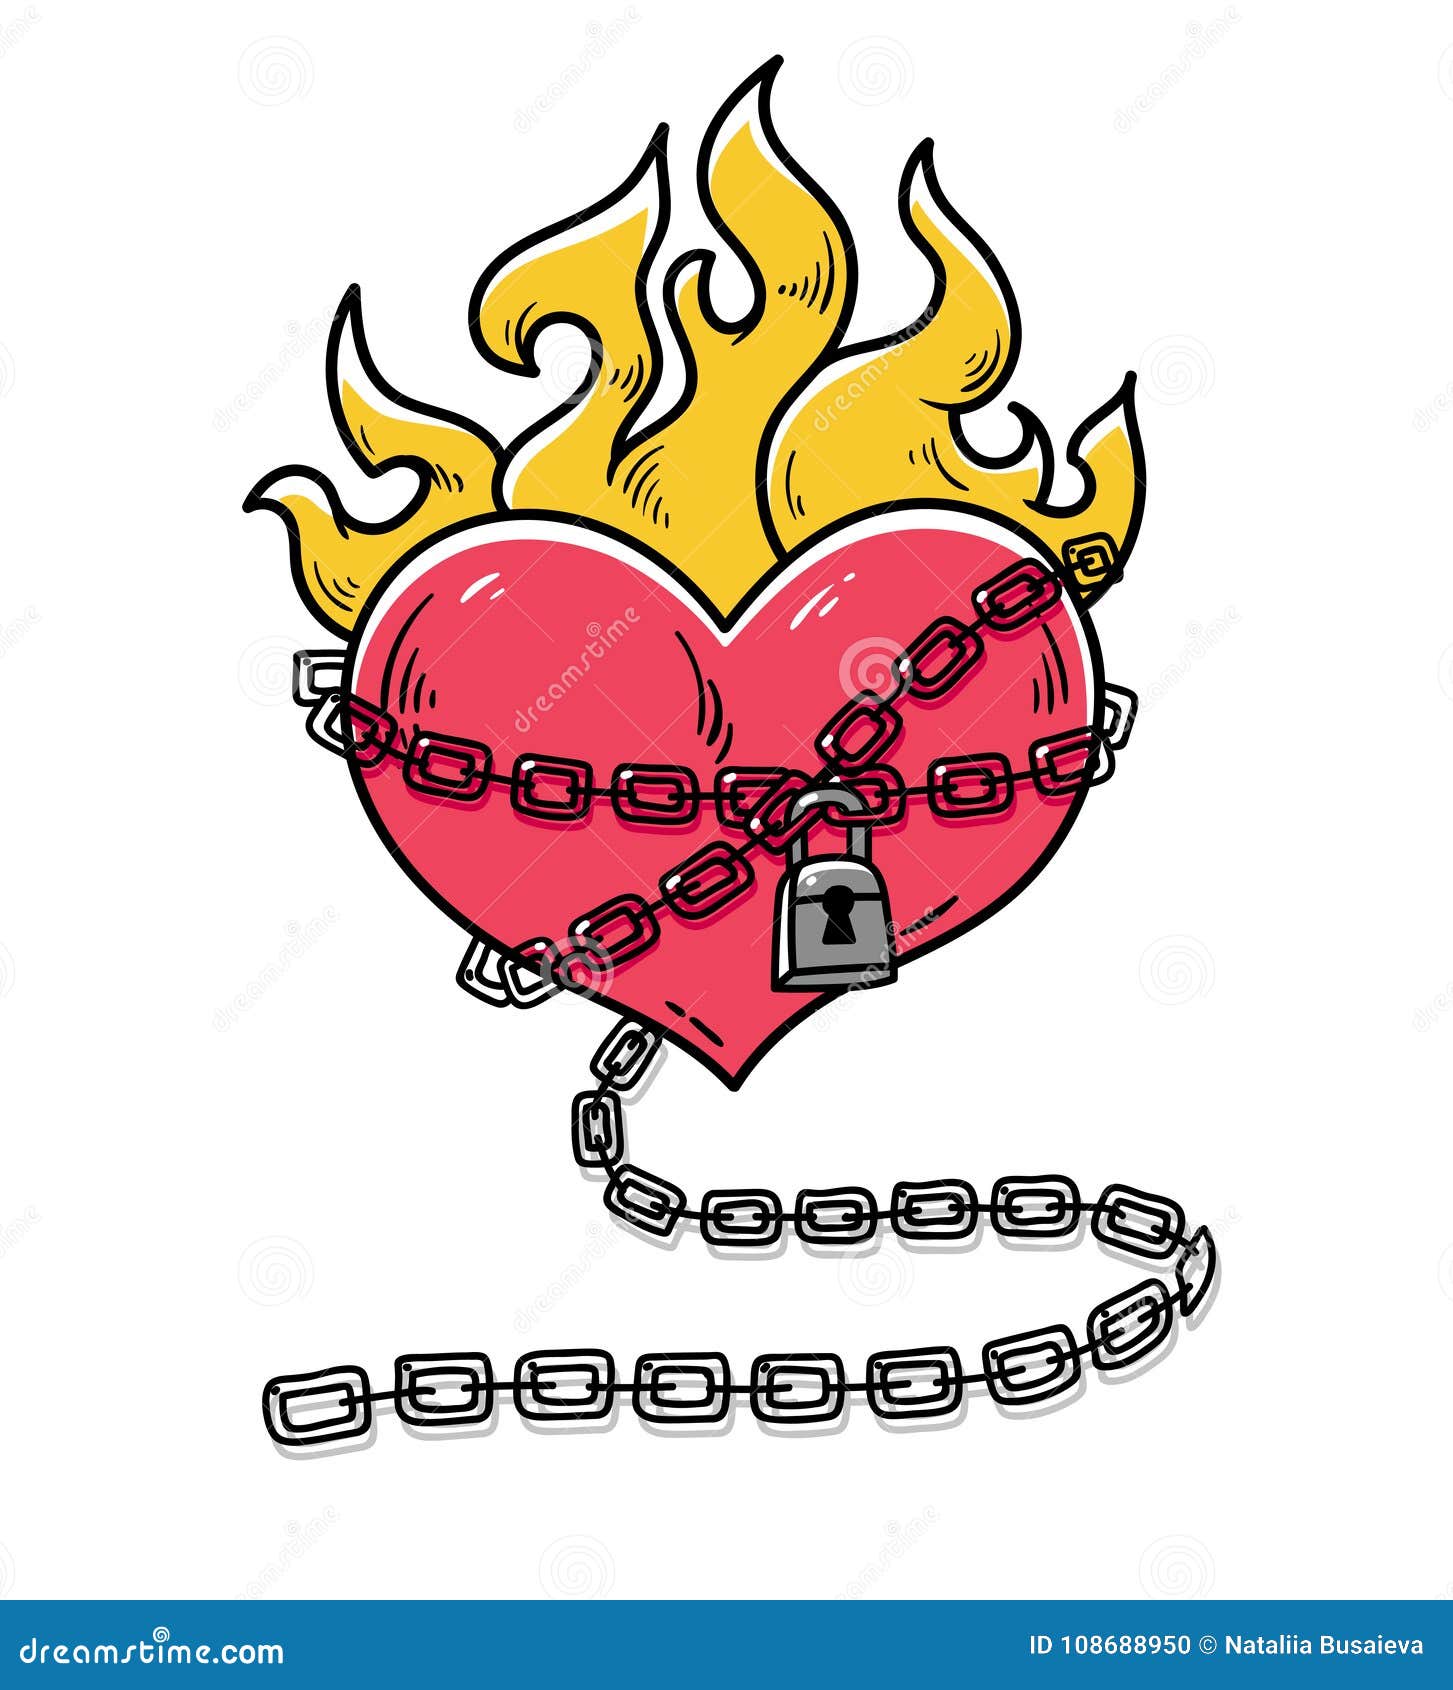 Burning Heart  Tatyou Removable Tattoos